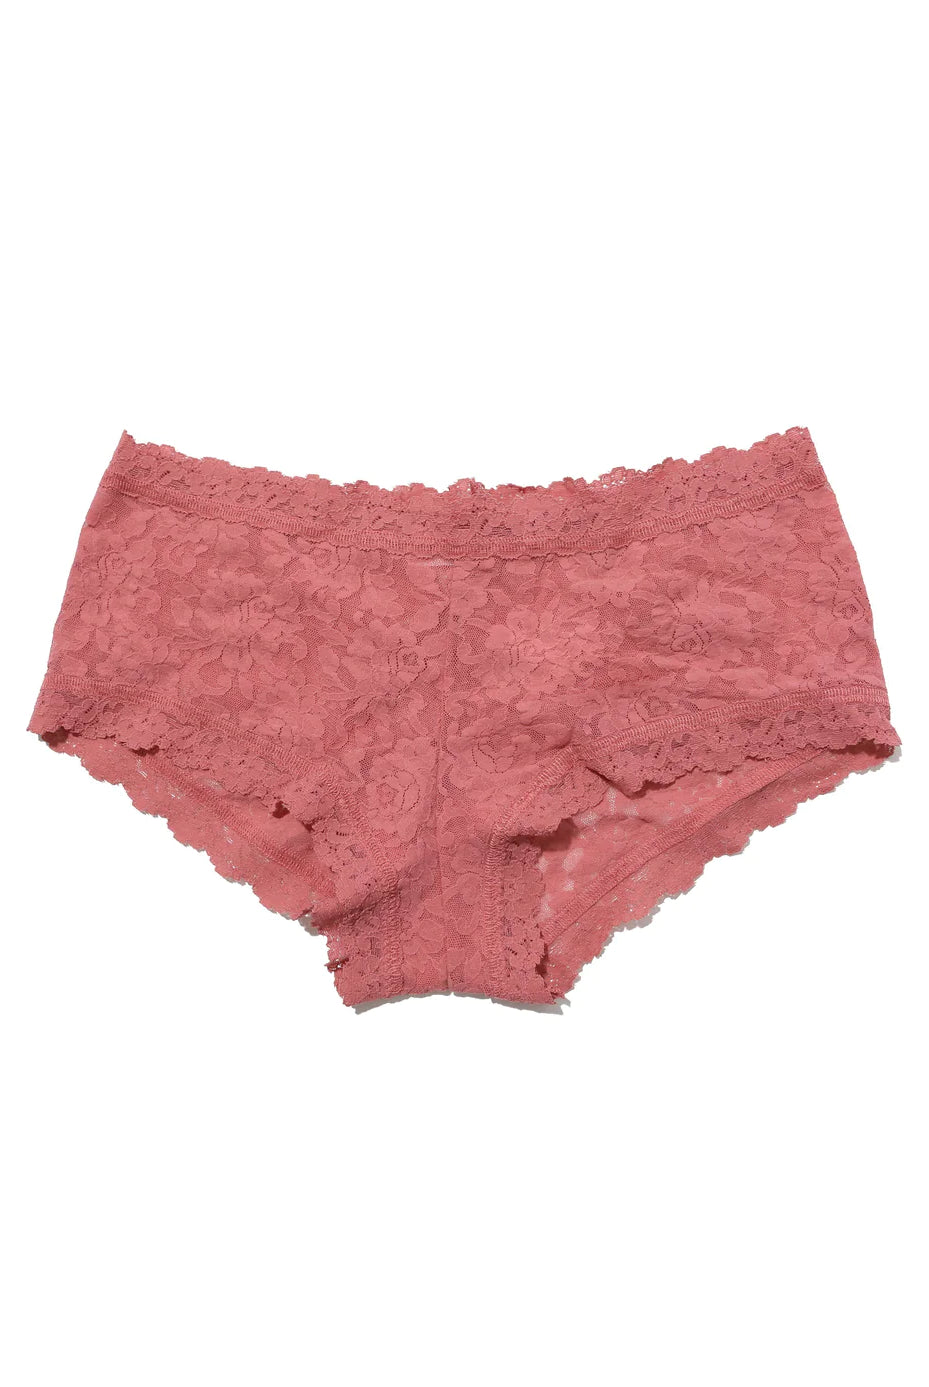 Signature Lace Boyshort - Pink Sands - Flirt! Luxe Lingerie & Sleepwear